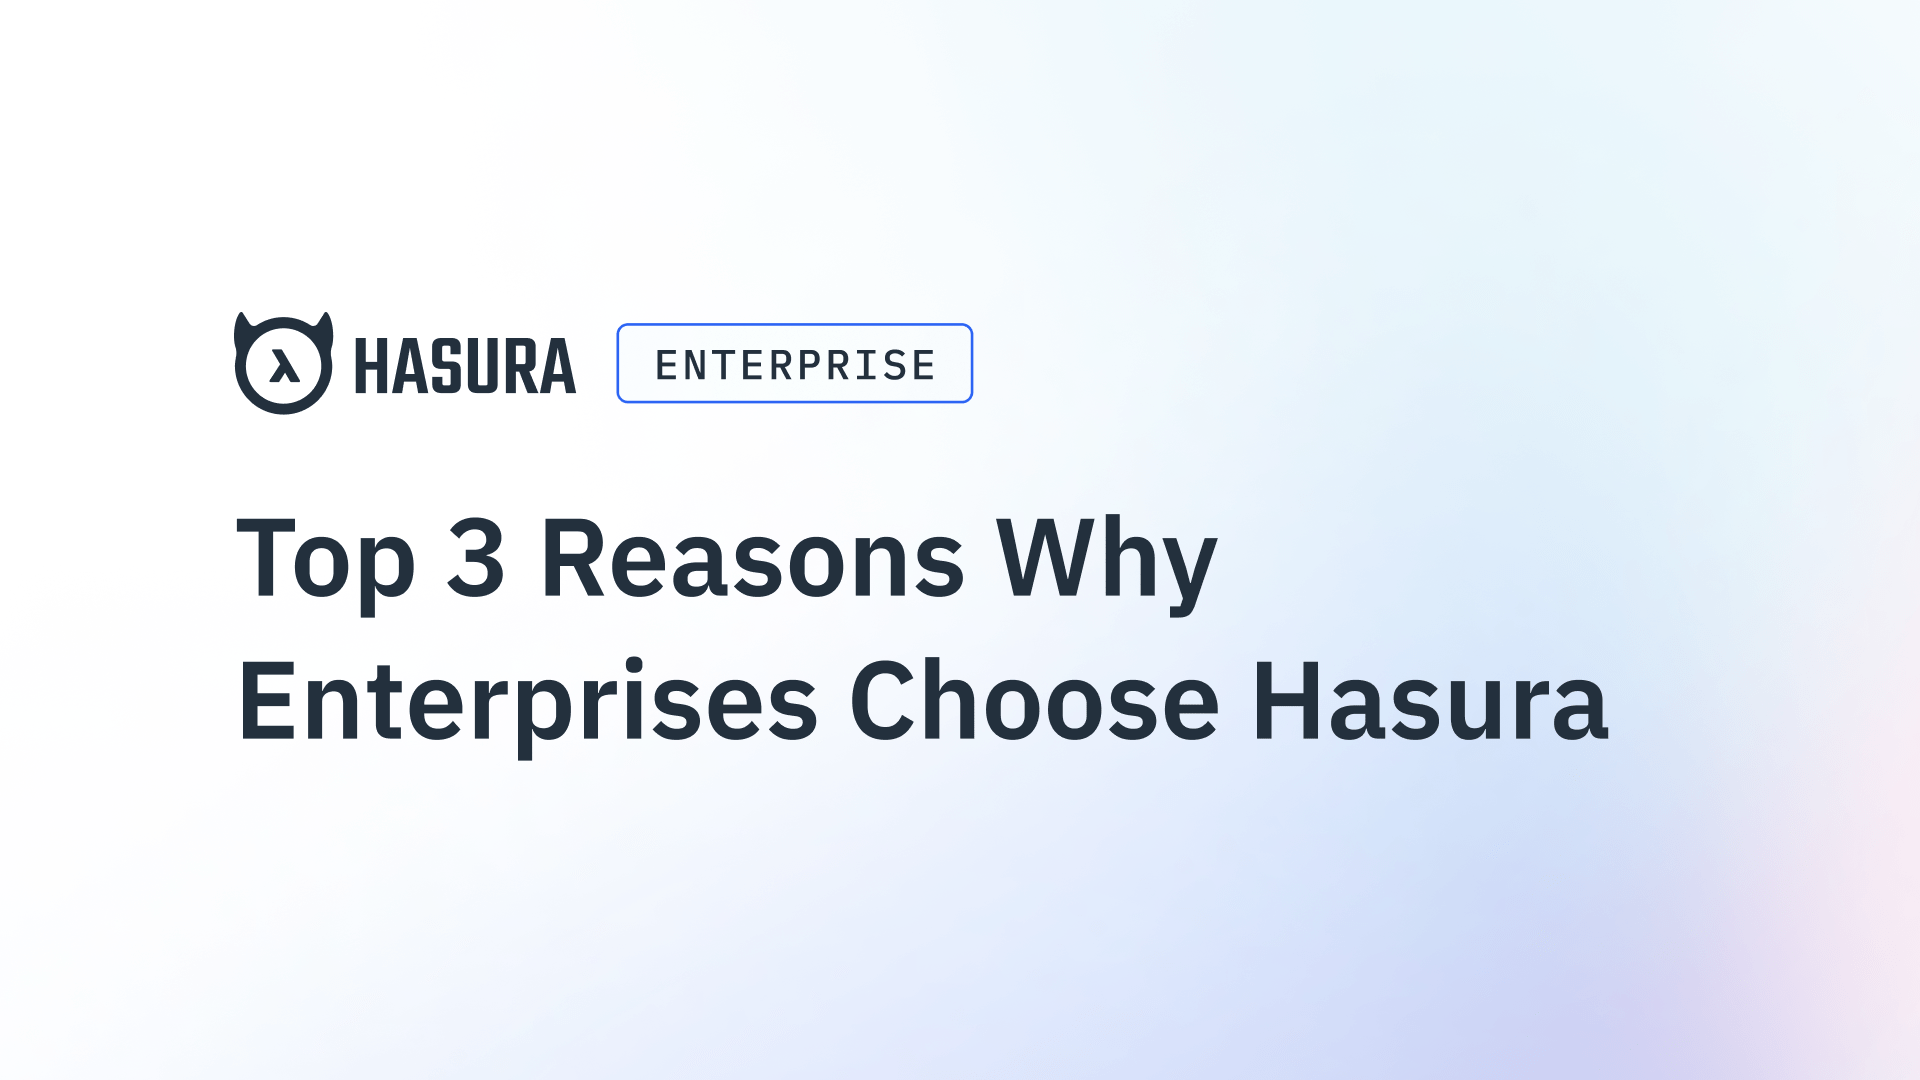 Top 3 Reasons why Enterprises Choose Hasura